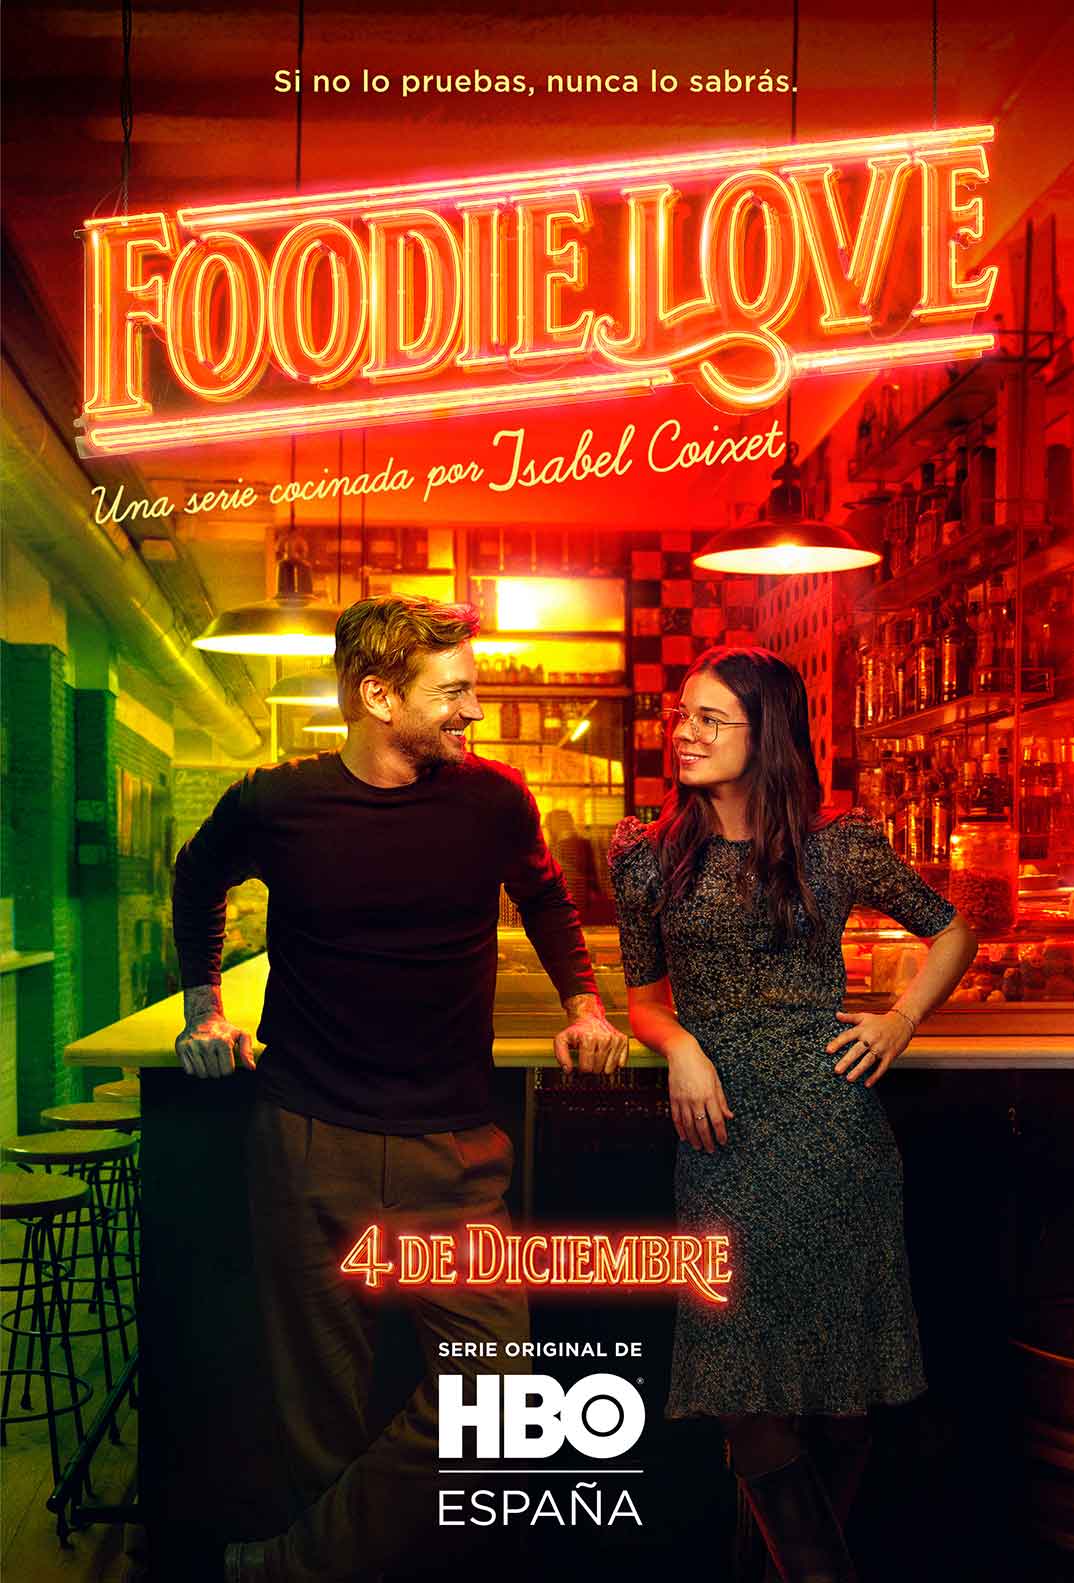 Foodie Love Poster © HBO/España